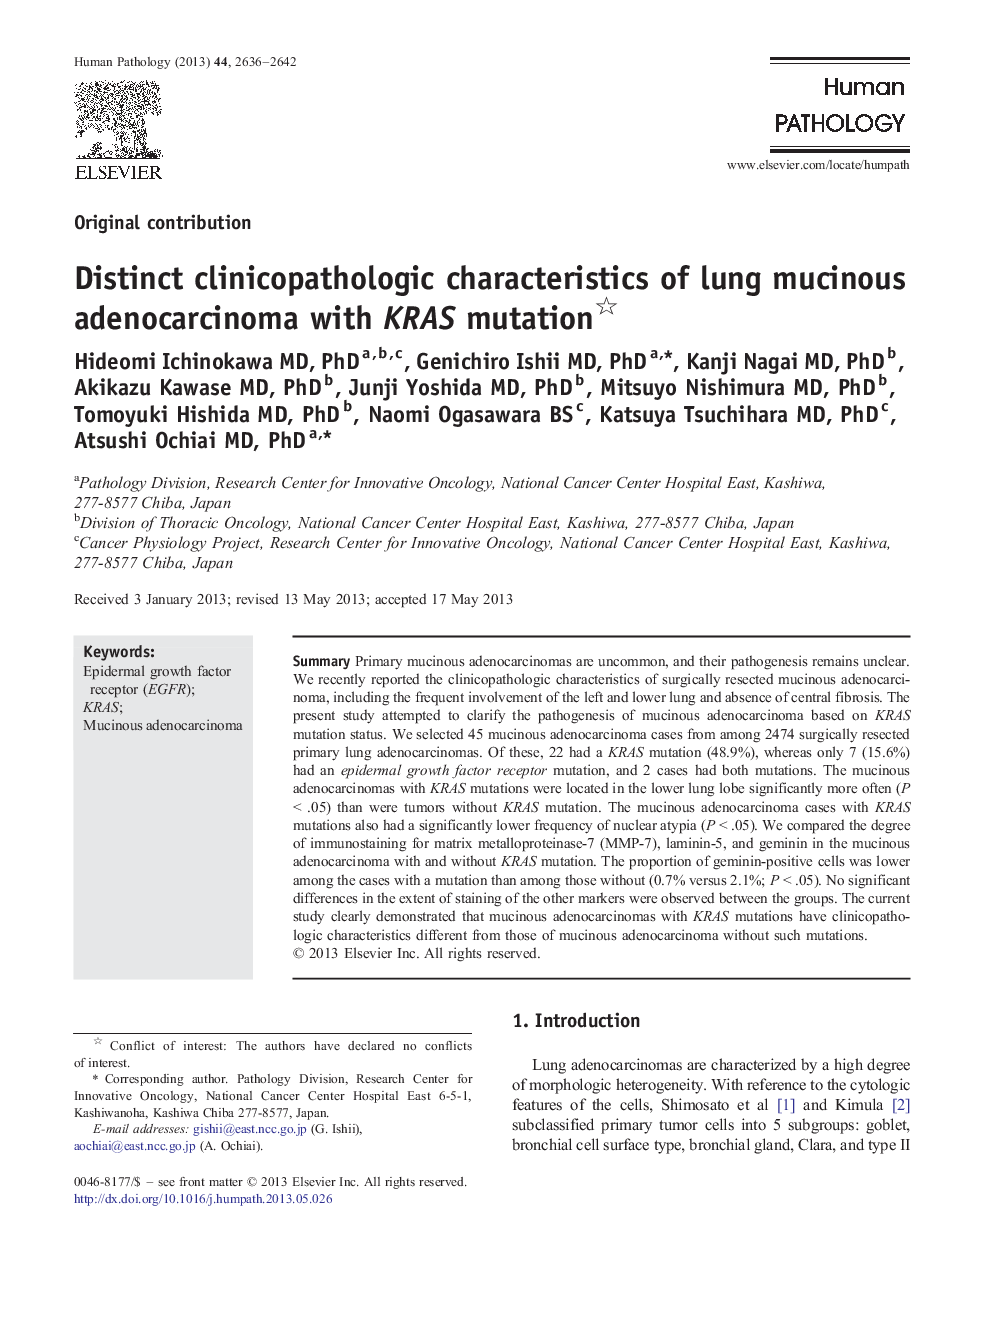 Distinct clinicopathologic characteristics of lung mucinous adenocarcinoma with KRAS mutation 